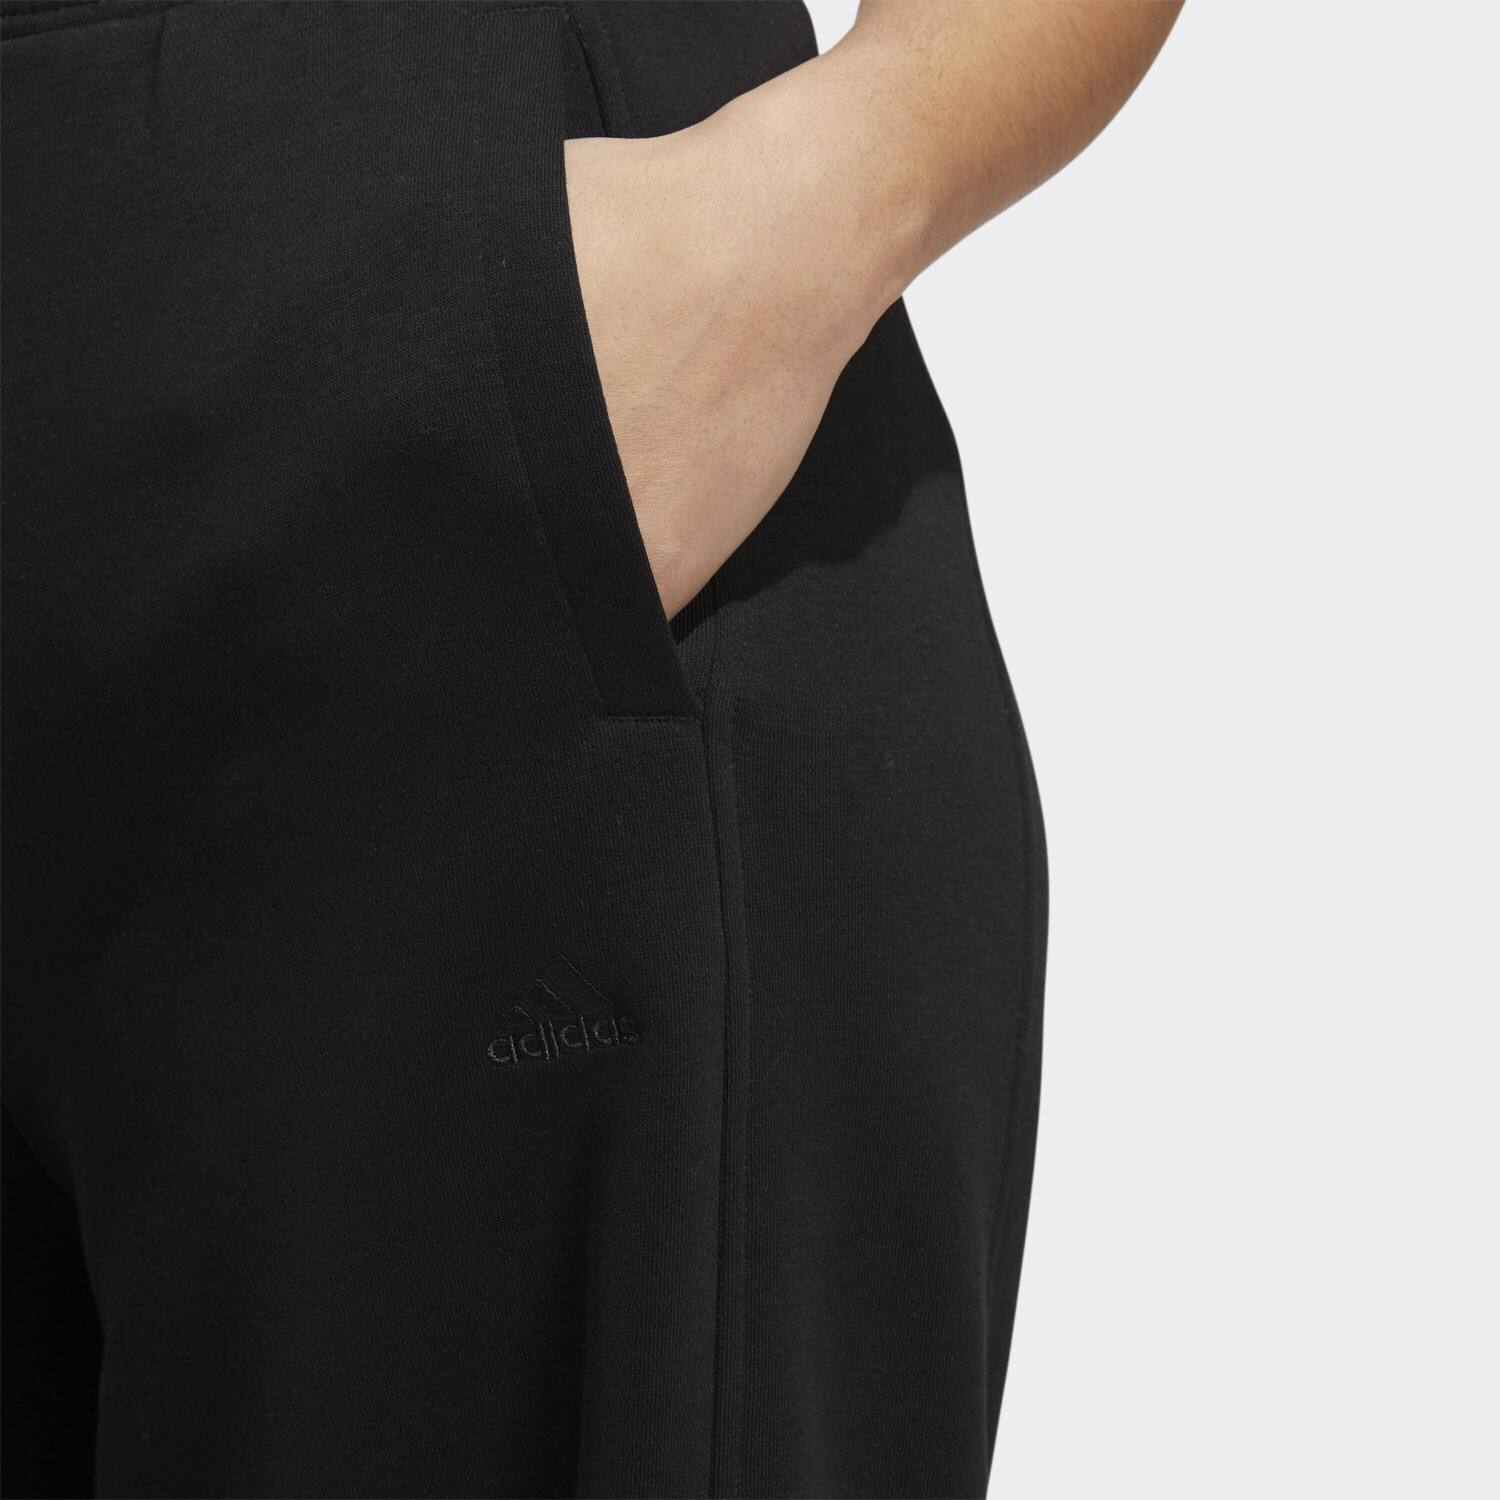 Adidas Woman ALL (HT3302) Preisvergleich Fleece black bei SZN 30,49 ab € Pants | Wide